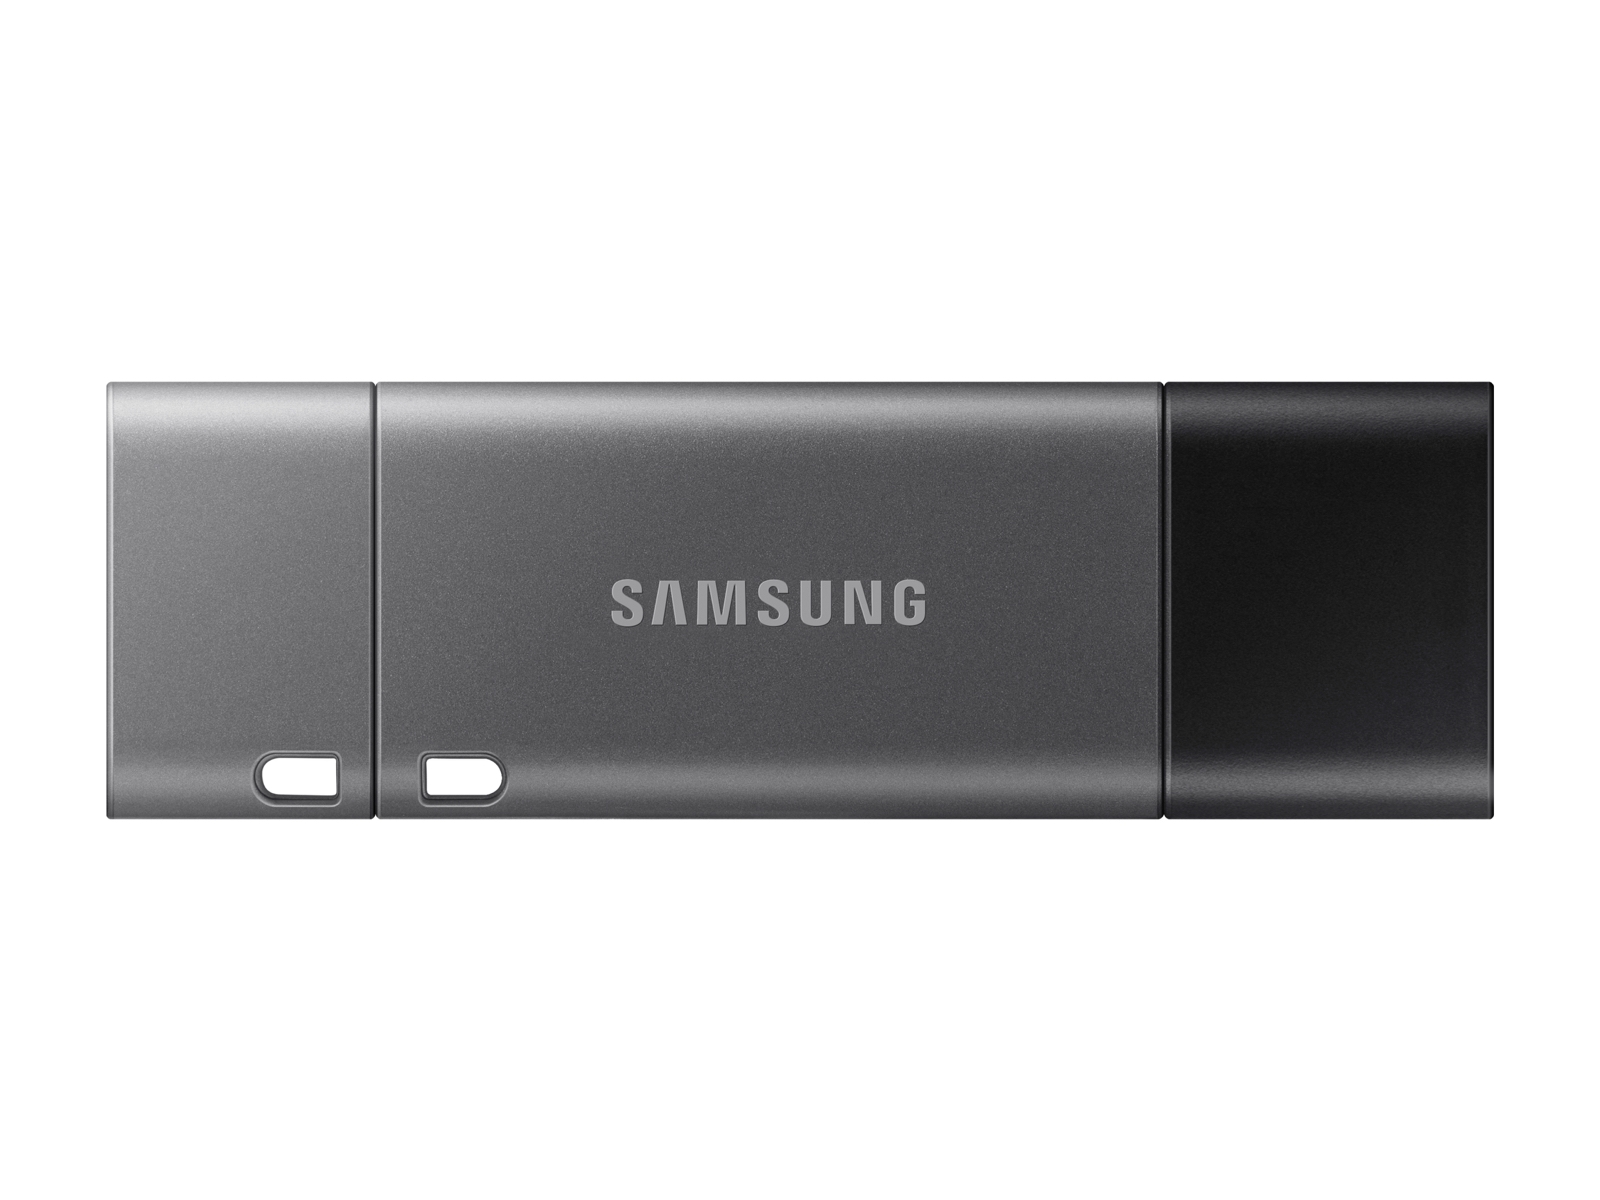 Trin dukke Halvkreds USB 3.1 Flash Drive DUO Plus 256GB Memory & Storage - MUF-256DB/AM |  Samsung US